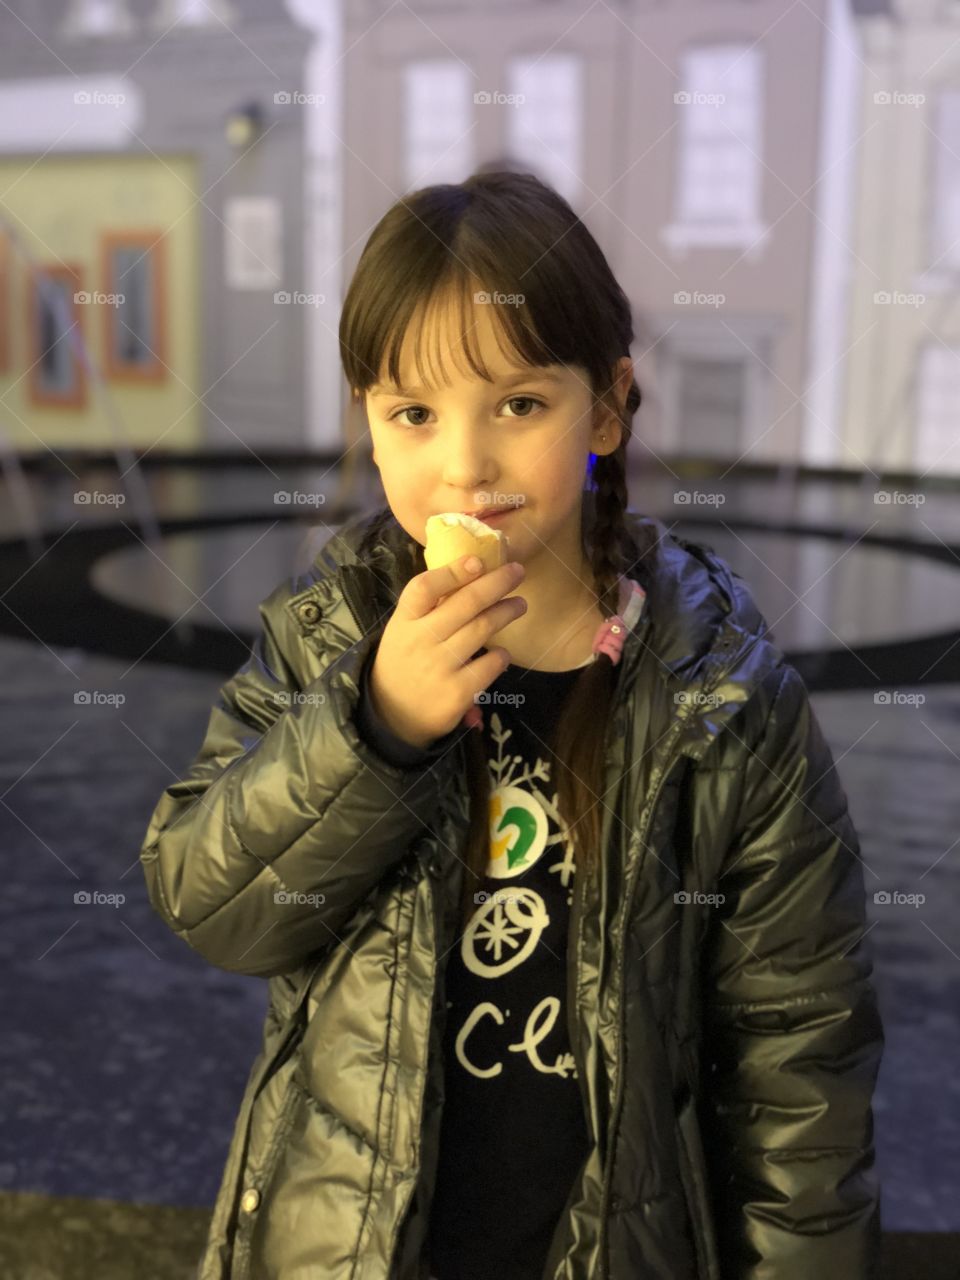 Litle girl eating ice creams